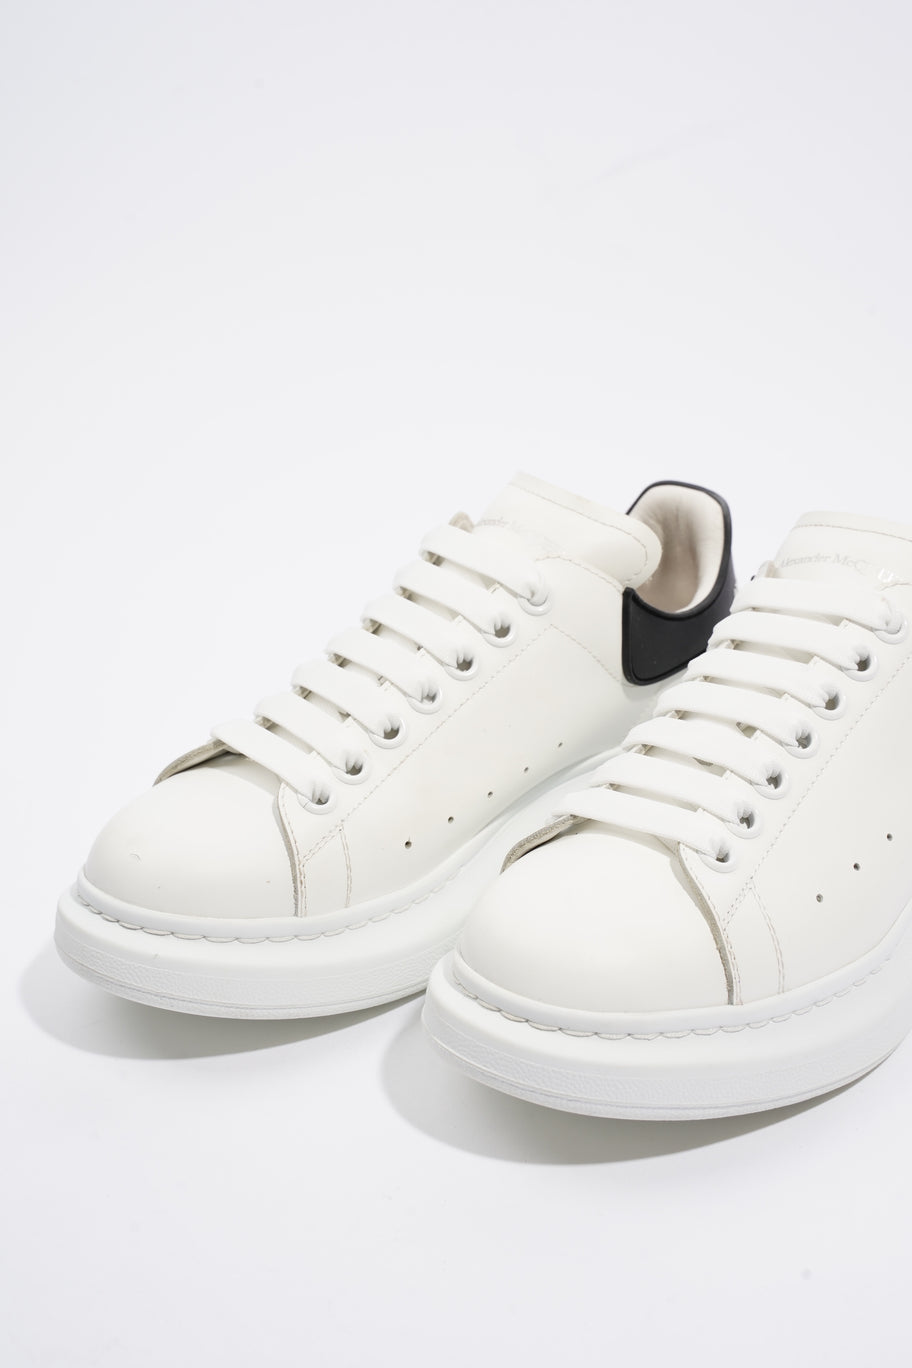 Oversized Sneaker White / Black Tab Leather EU 38 UK 5 Image 9